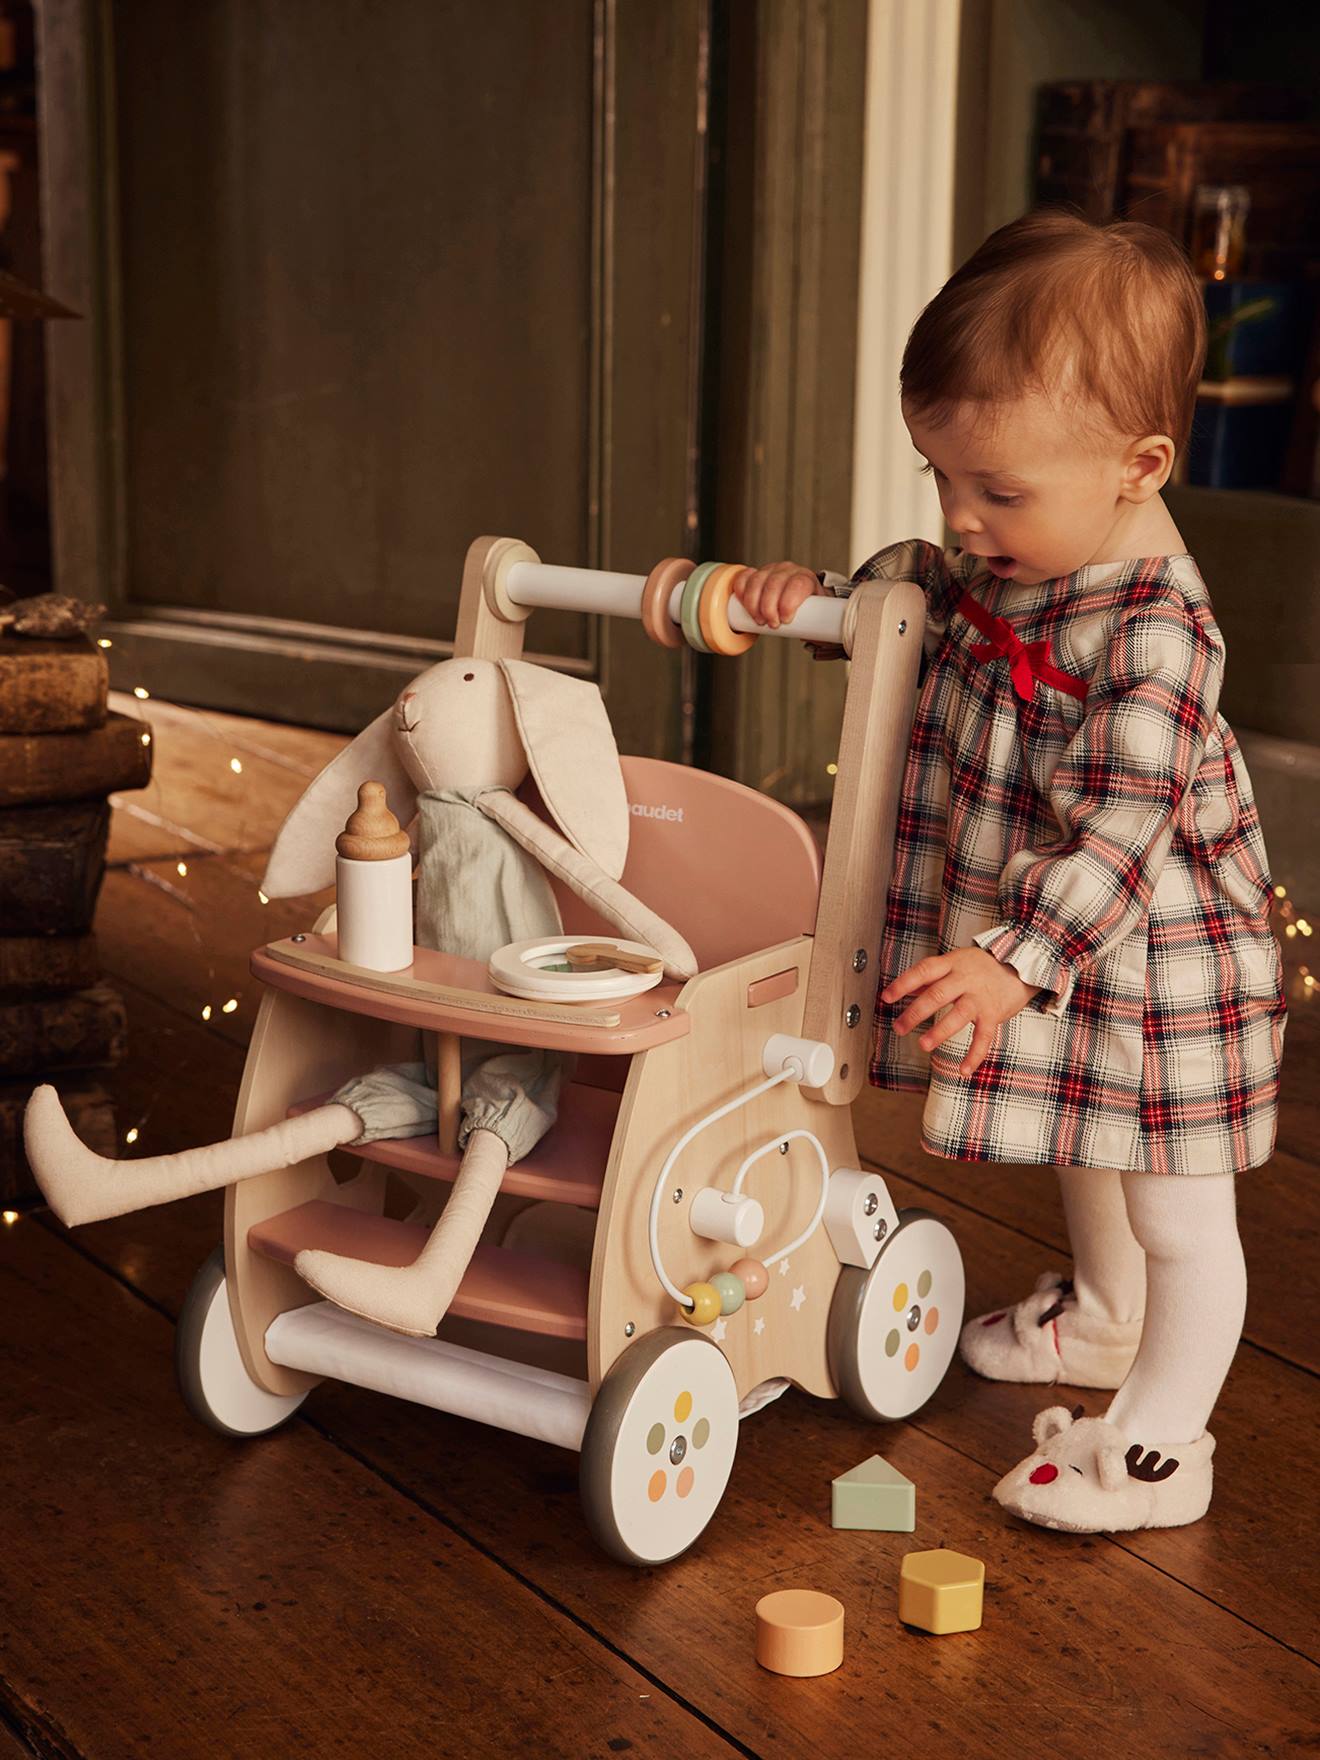 Carrito de compras de madera para niños pequeños: cochecito de muñeca,  juguete de empuje para caminar para niños niñas de 1 a 3 años (rosa)